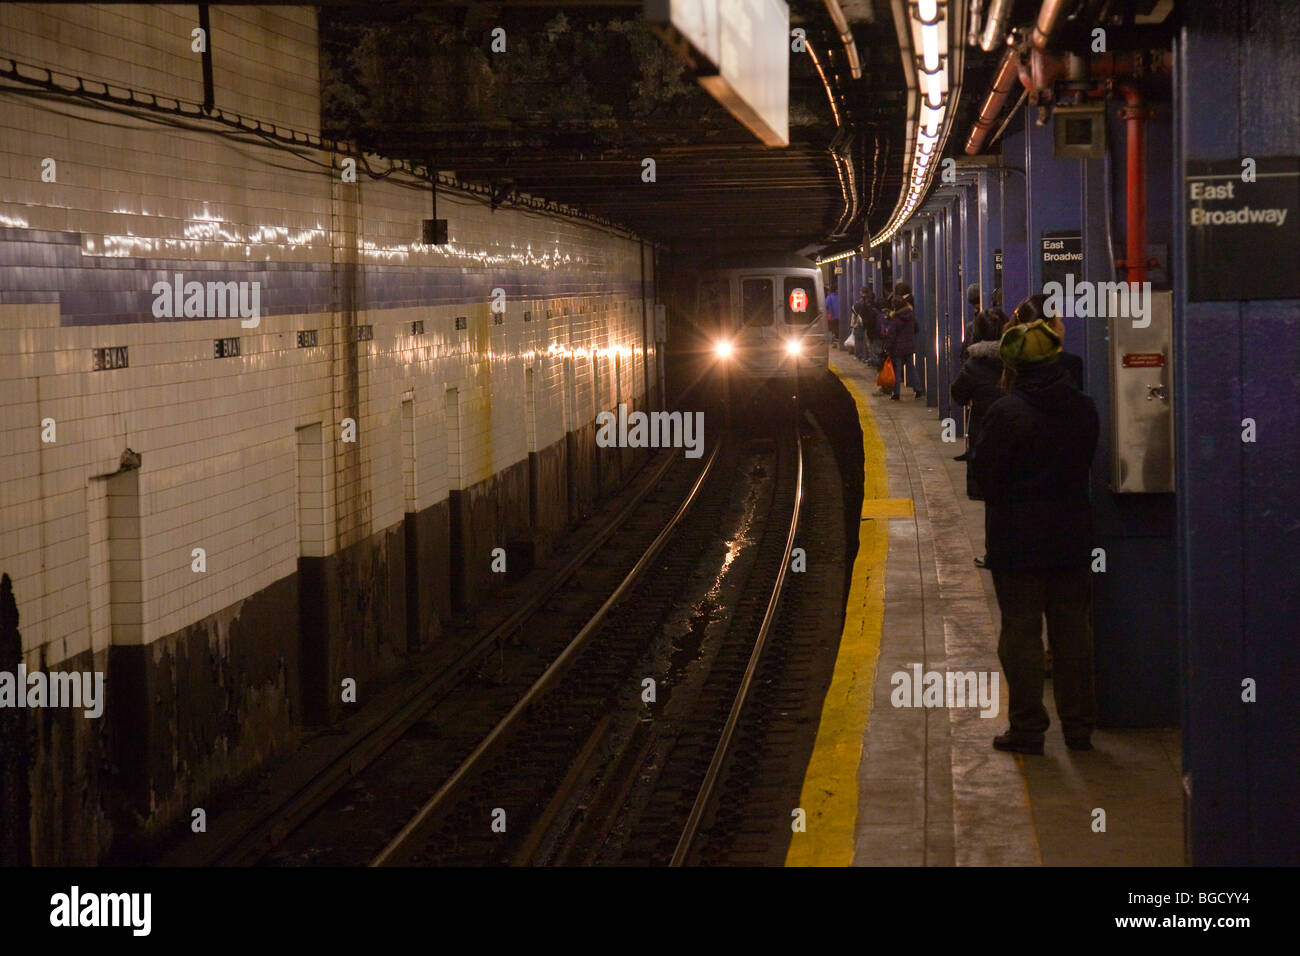 F Line Subway in New York City Stock Photo